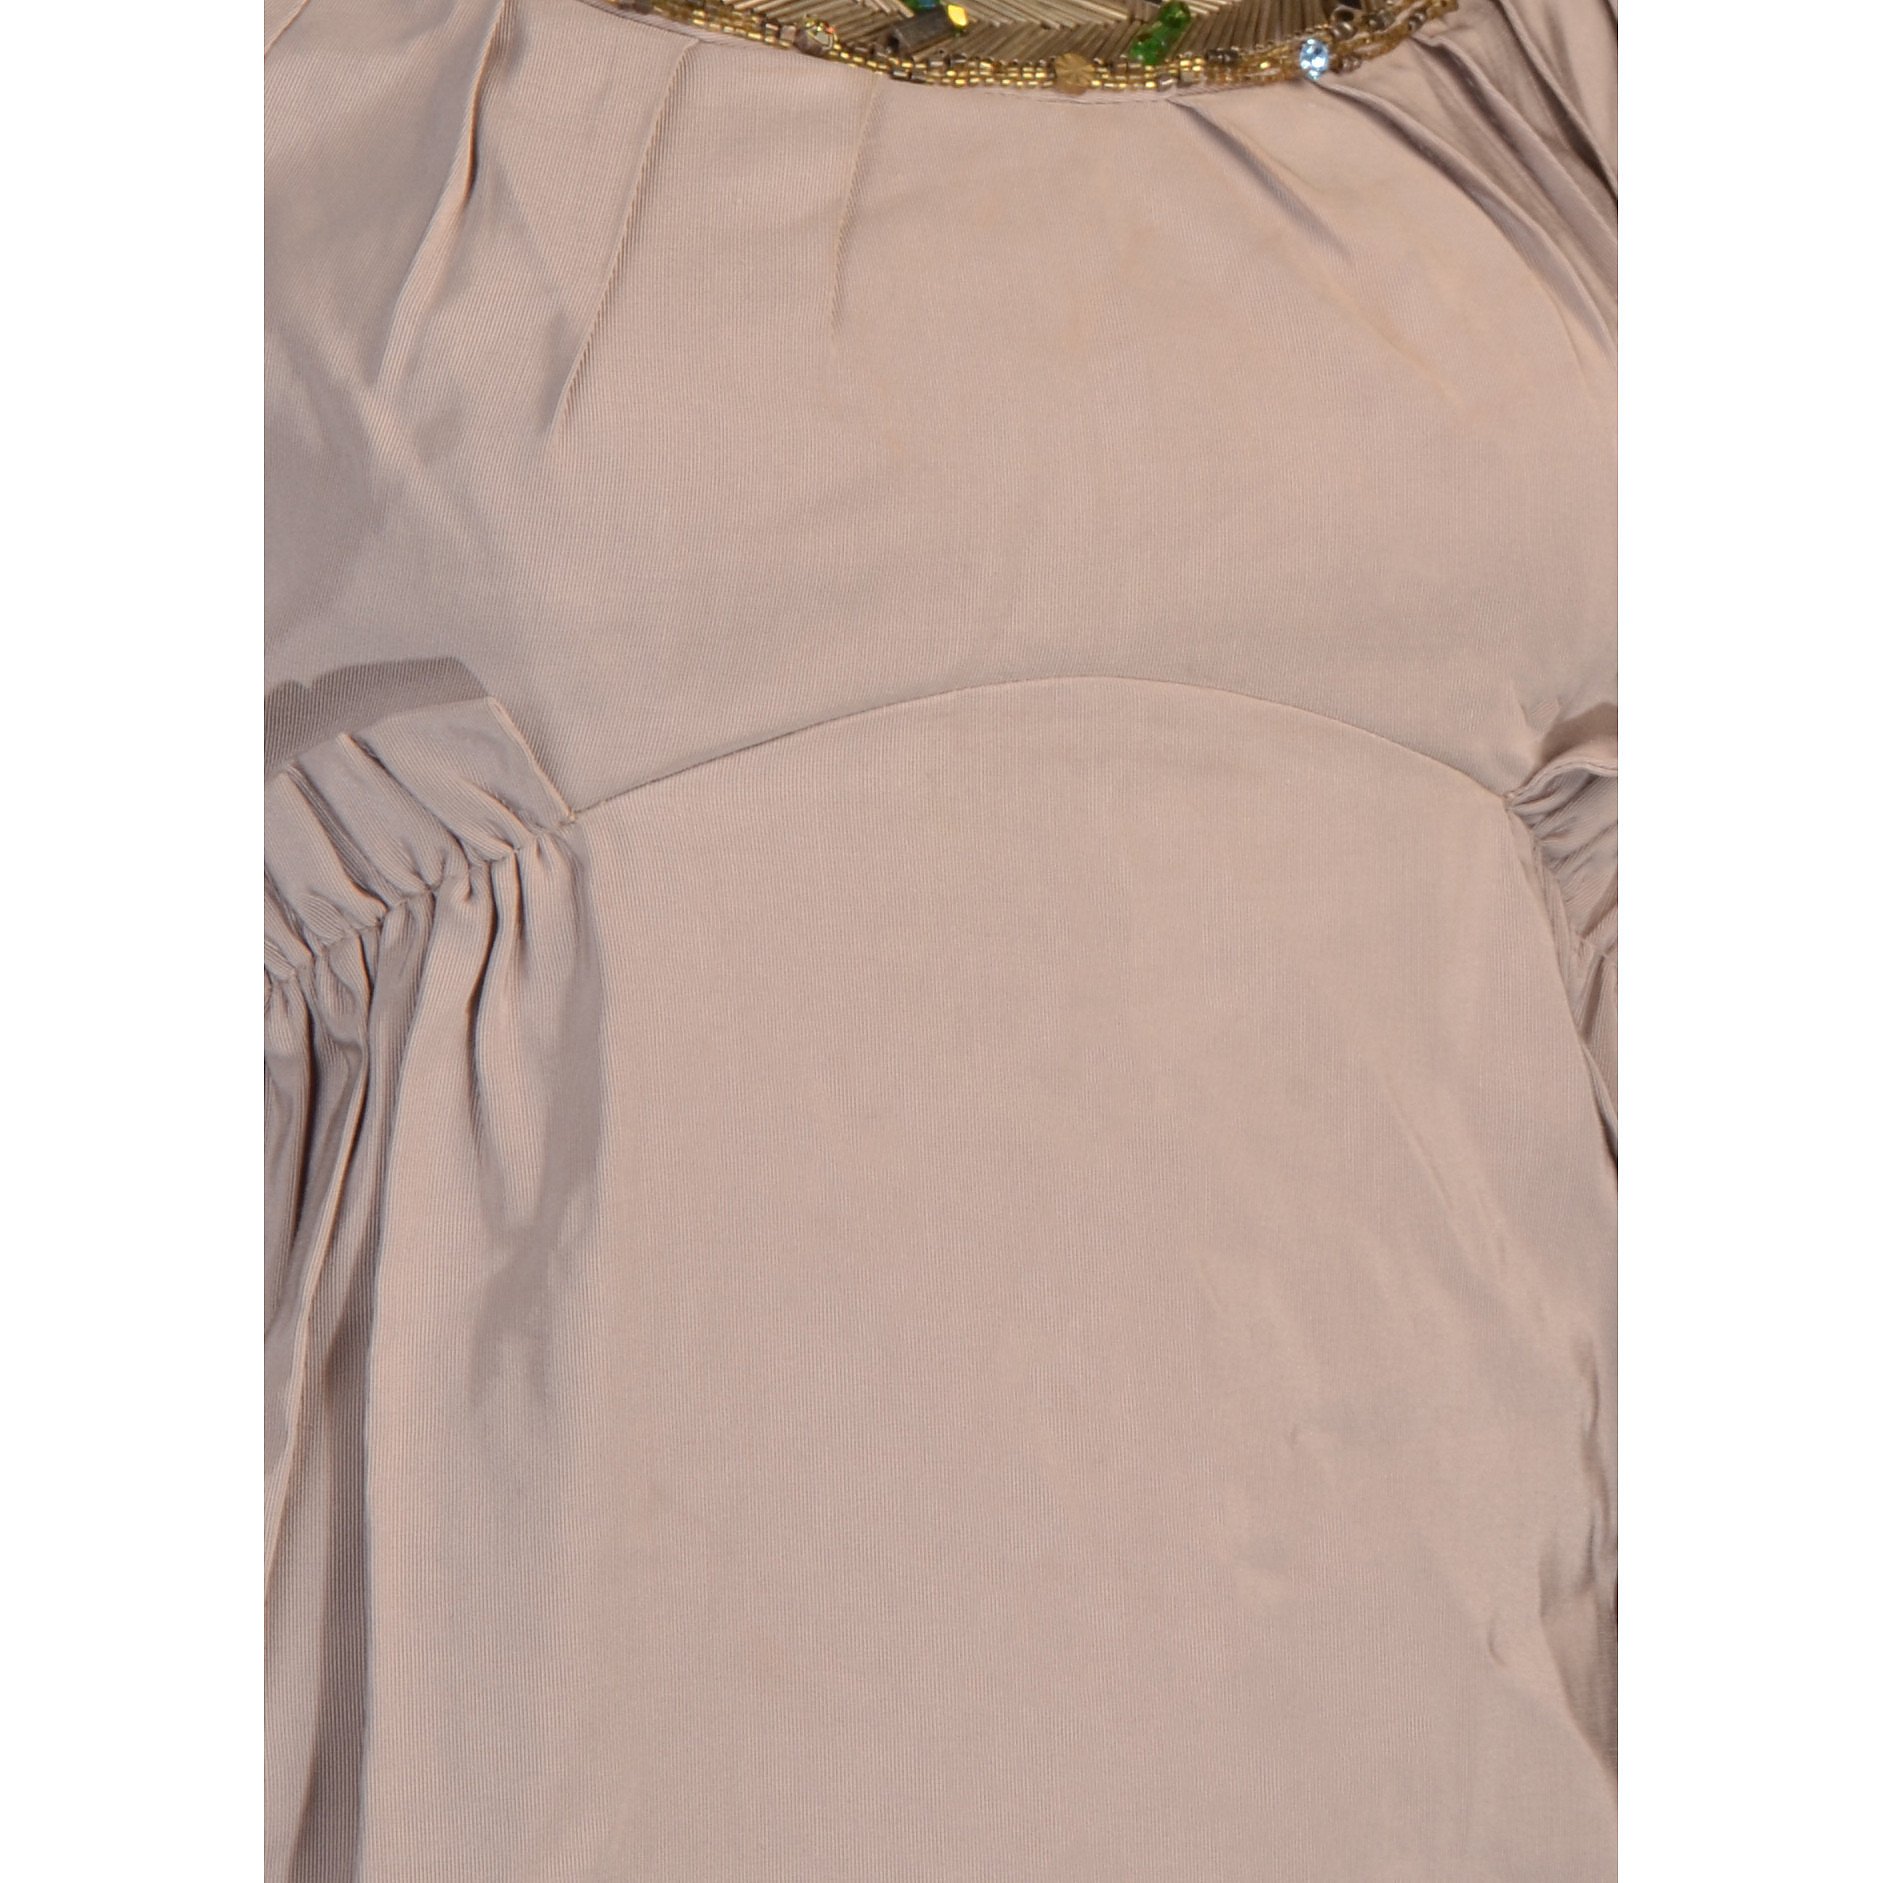 Matthew Williamson Embellished Short-Sleeve Dress